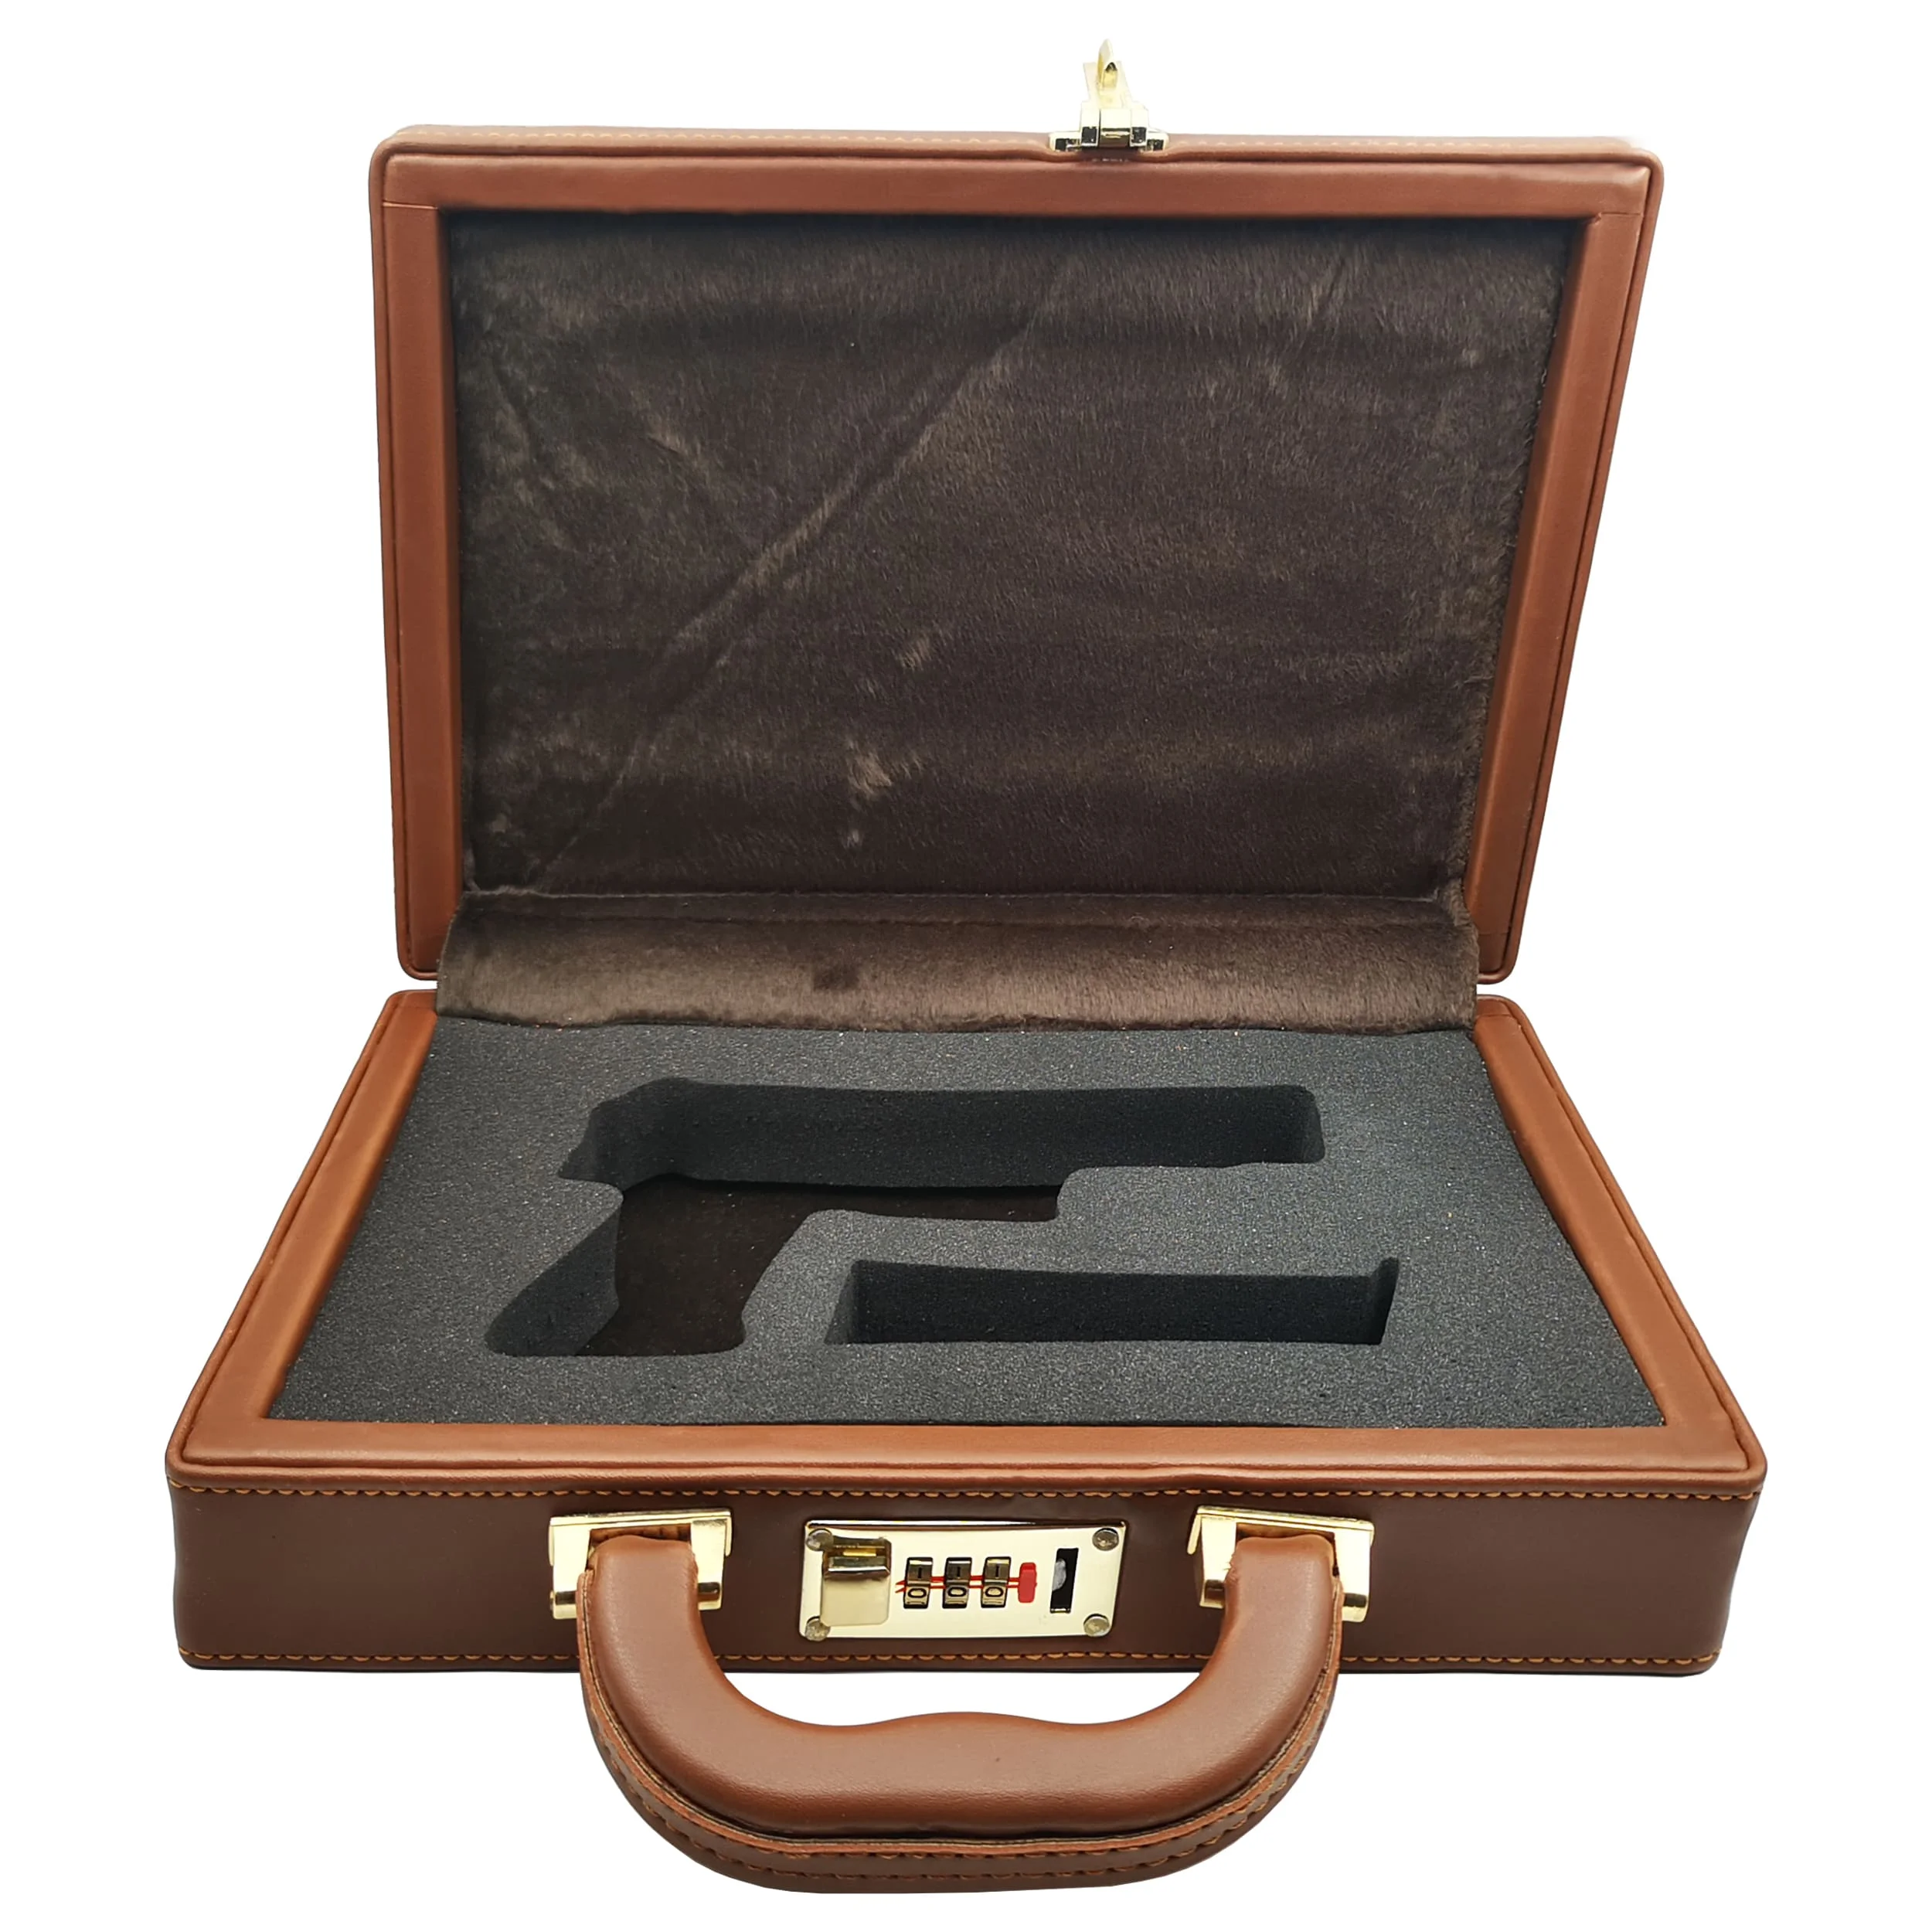 

Beretta MOD 70 Special Leather Gun Case Bond Style Personalized Password Lock System Handgun Carry And Storage Box